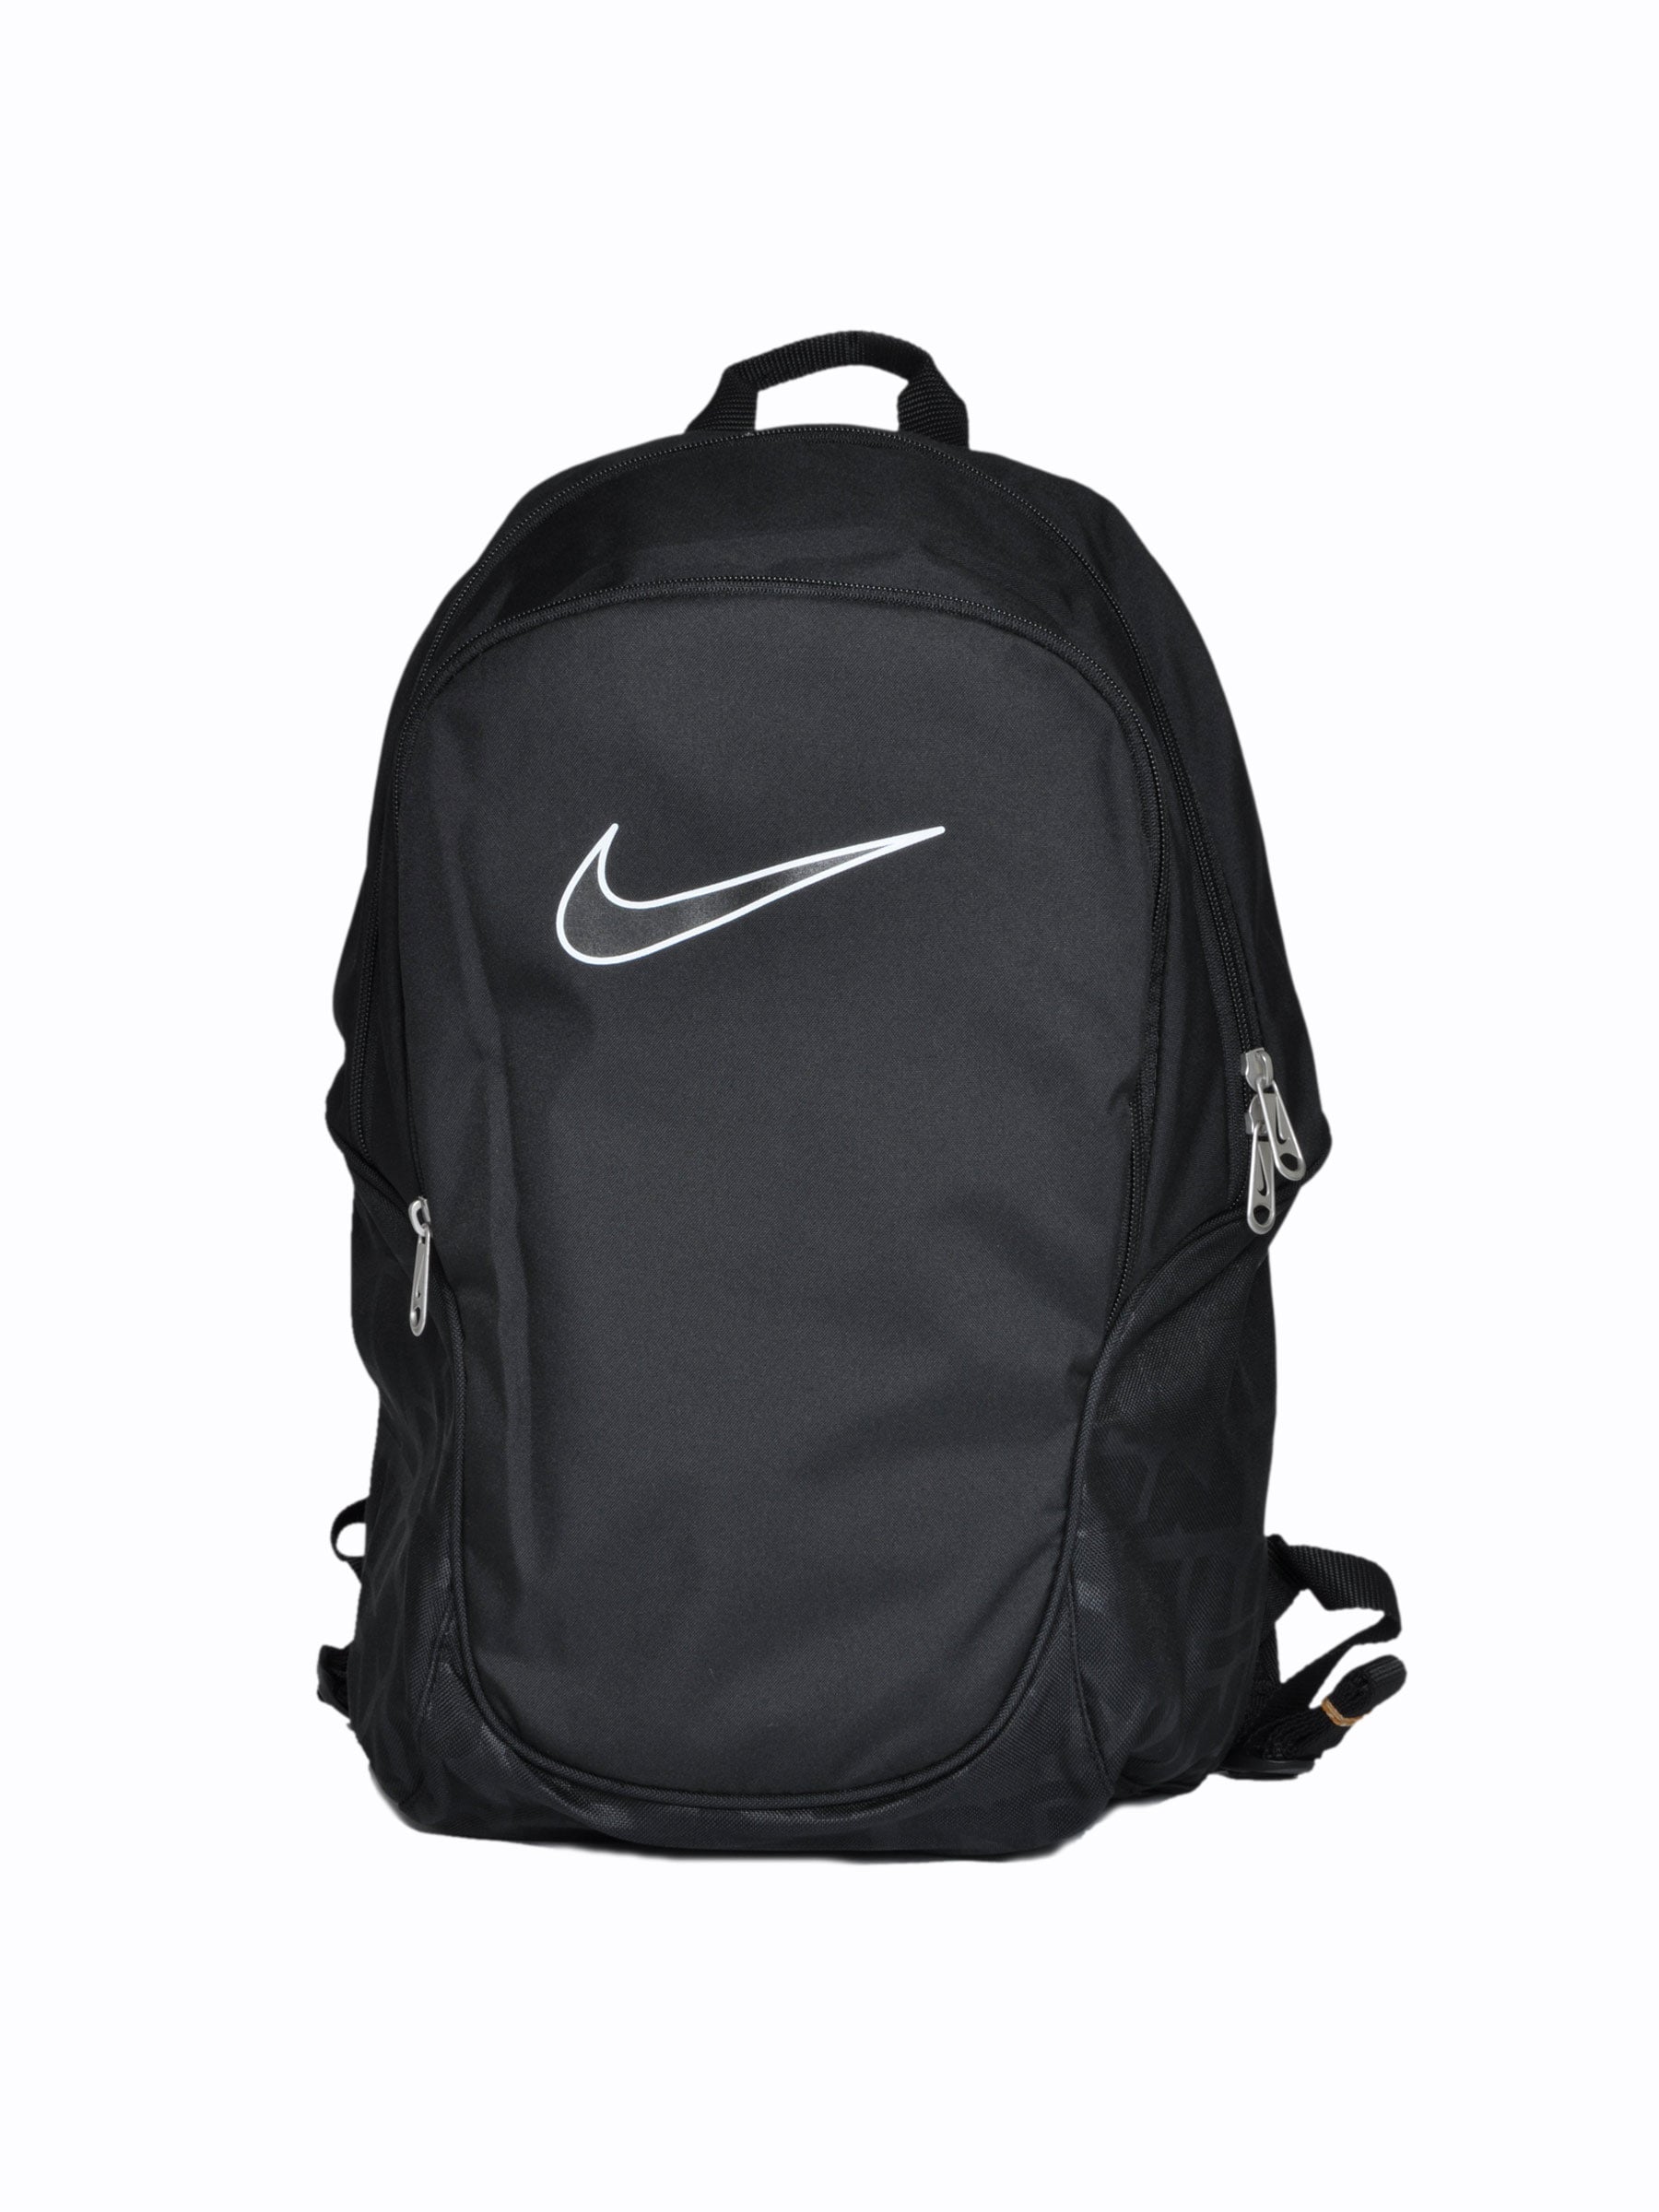 Nike Unisex Brasilia 5 Me Black Backpacks